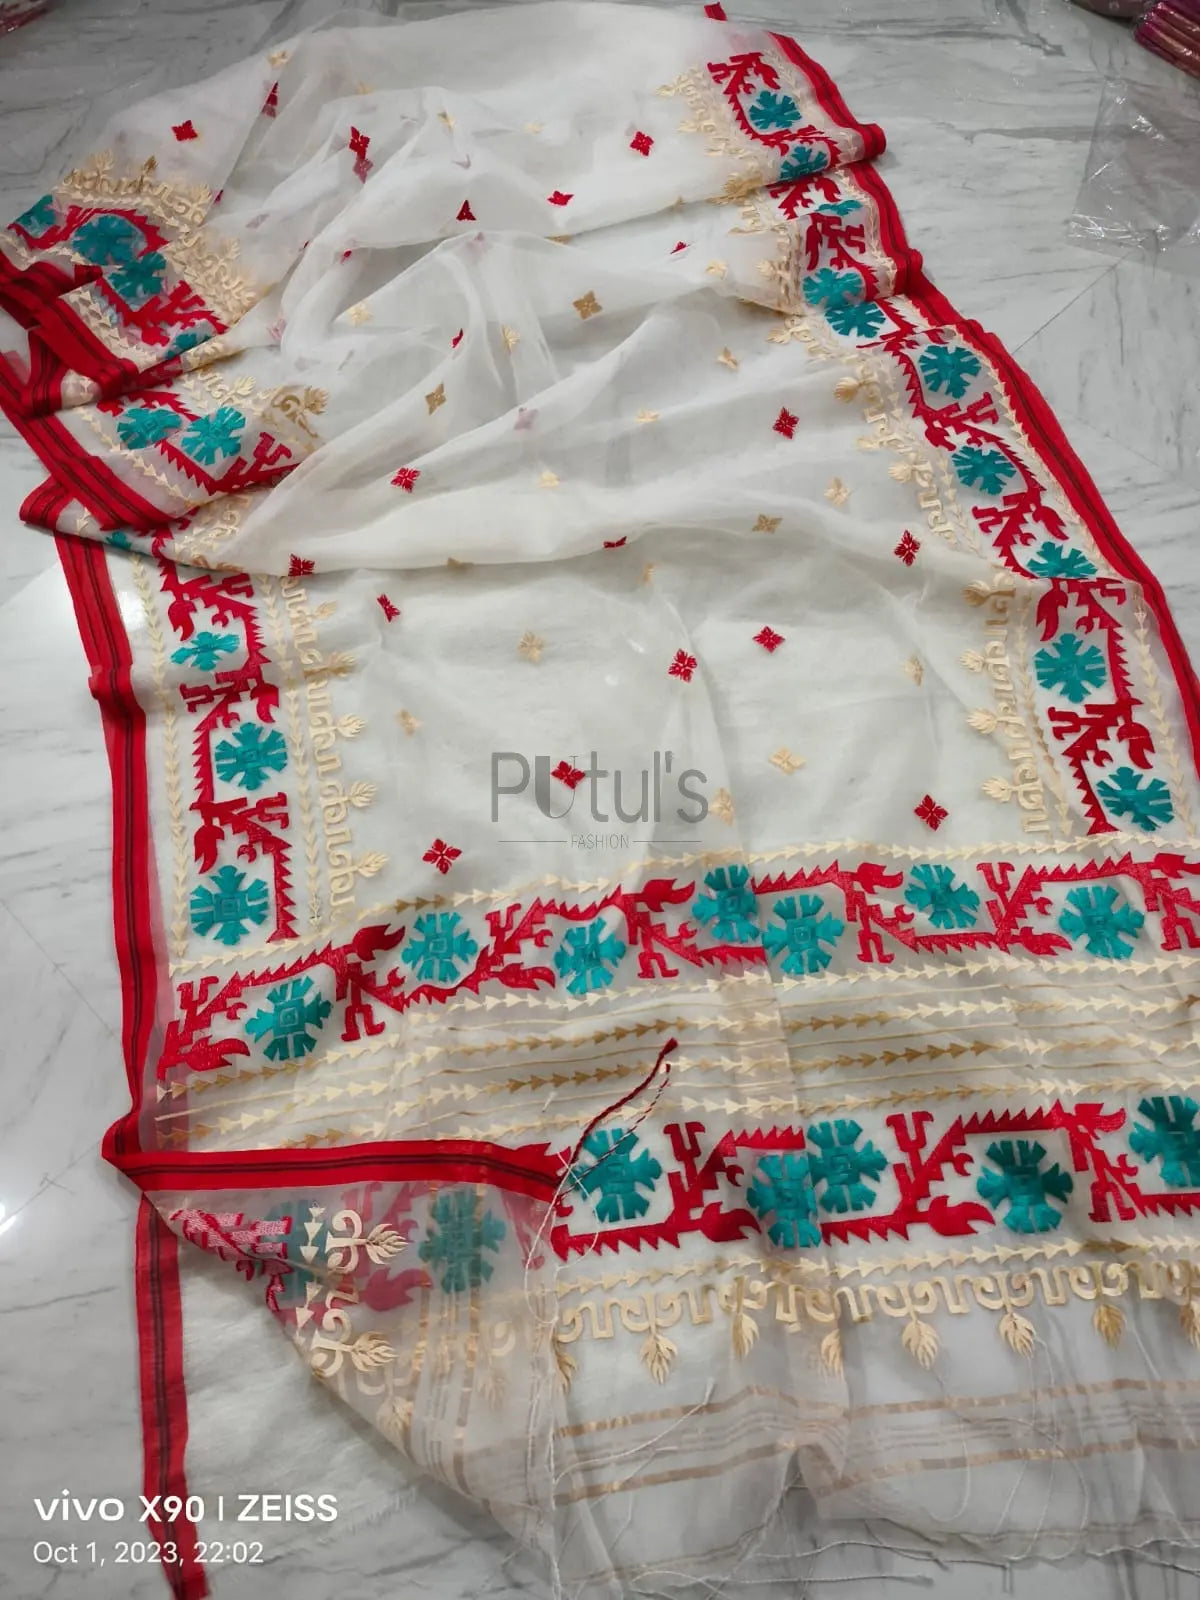 Soilasuta muslin jamdani of embroidery work Putul's Fashion